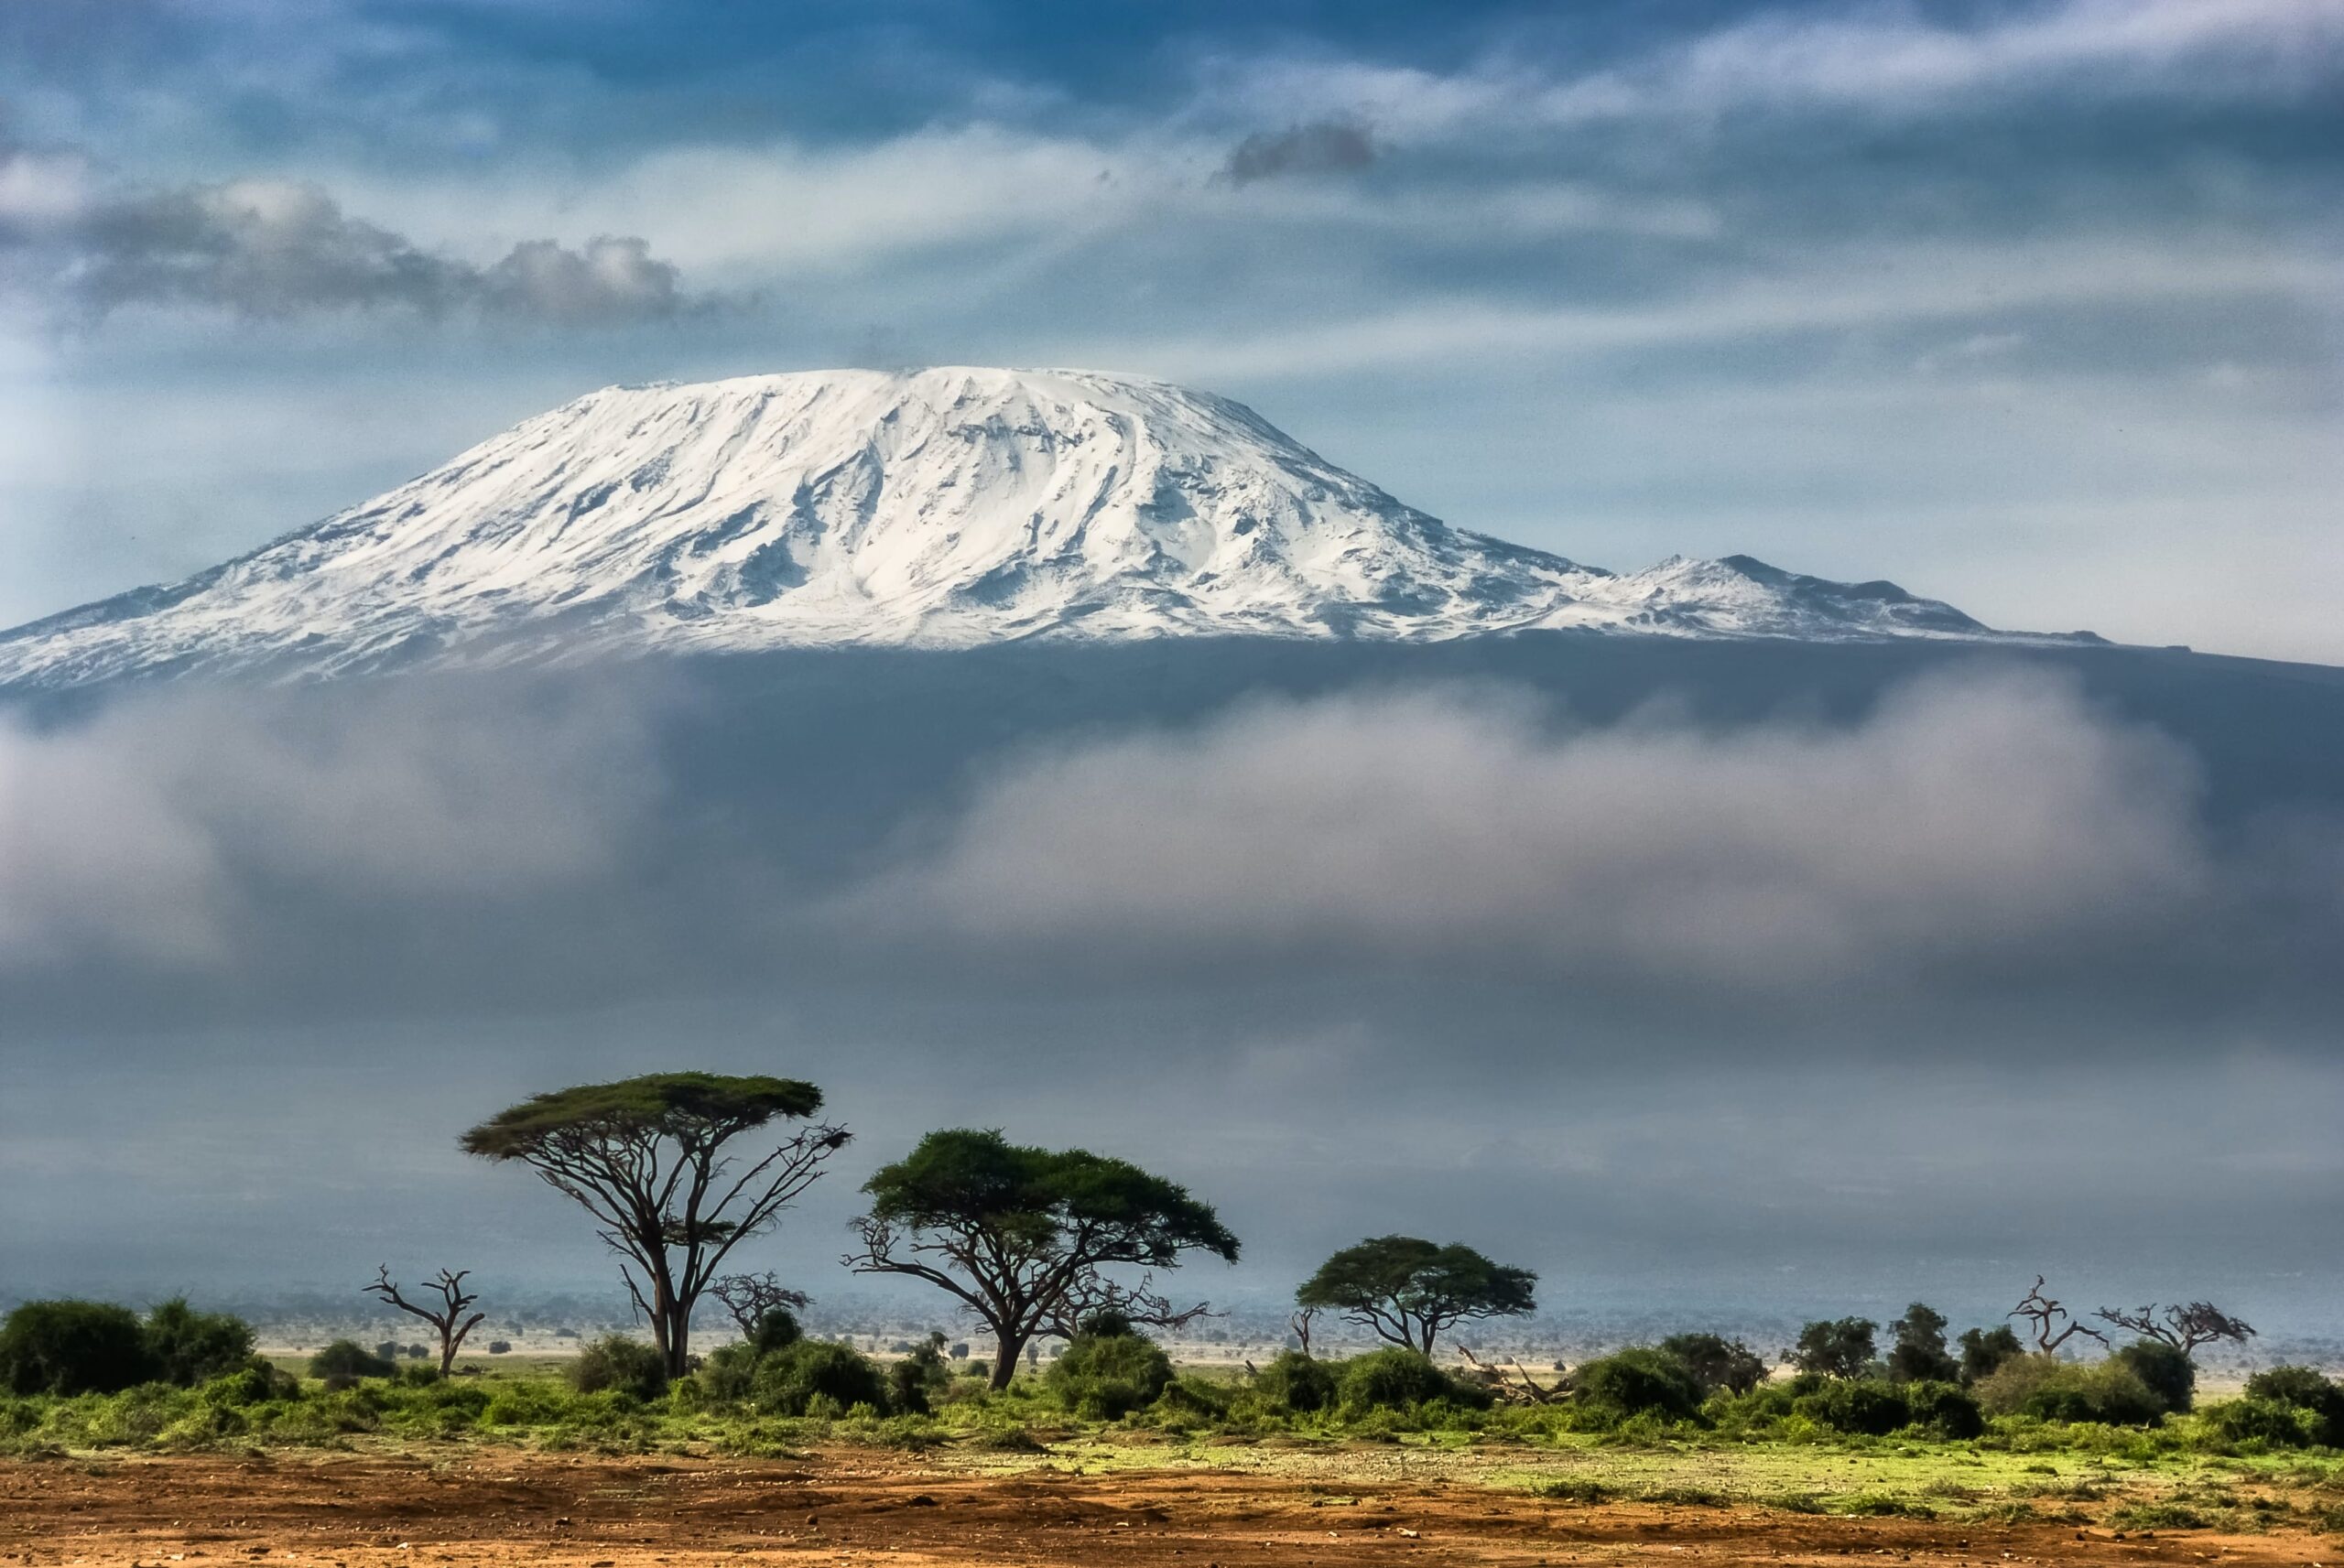 View of Kilimanjaro from Amboseli national park, Kenya